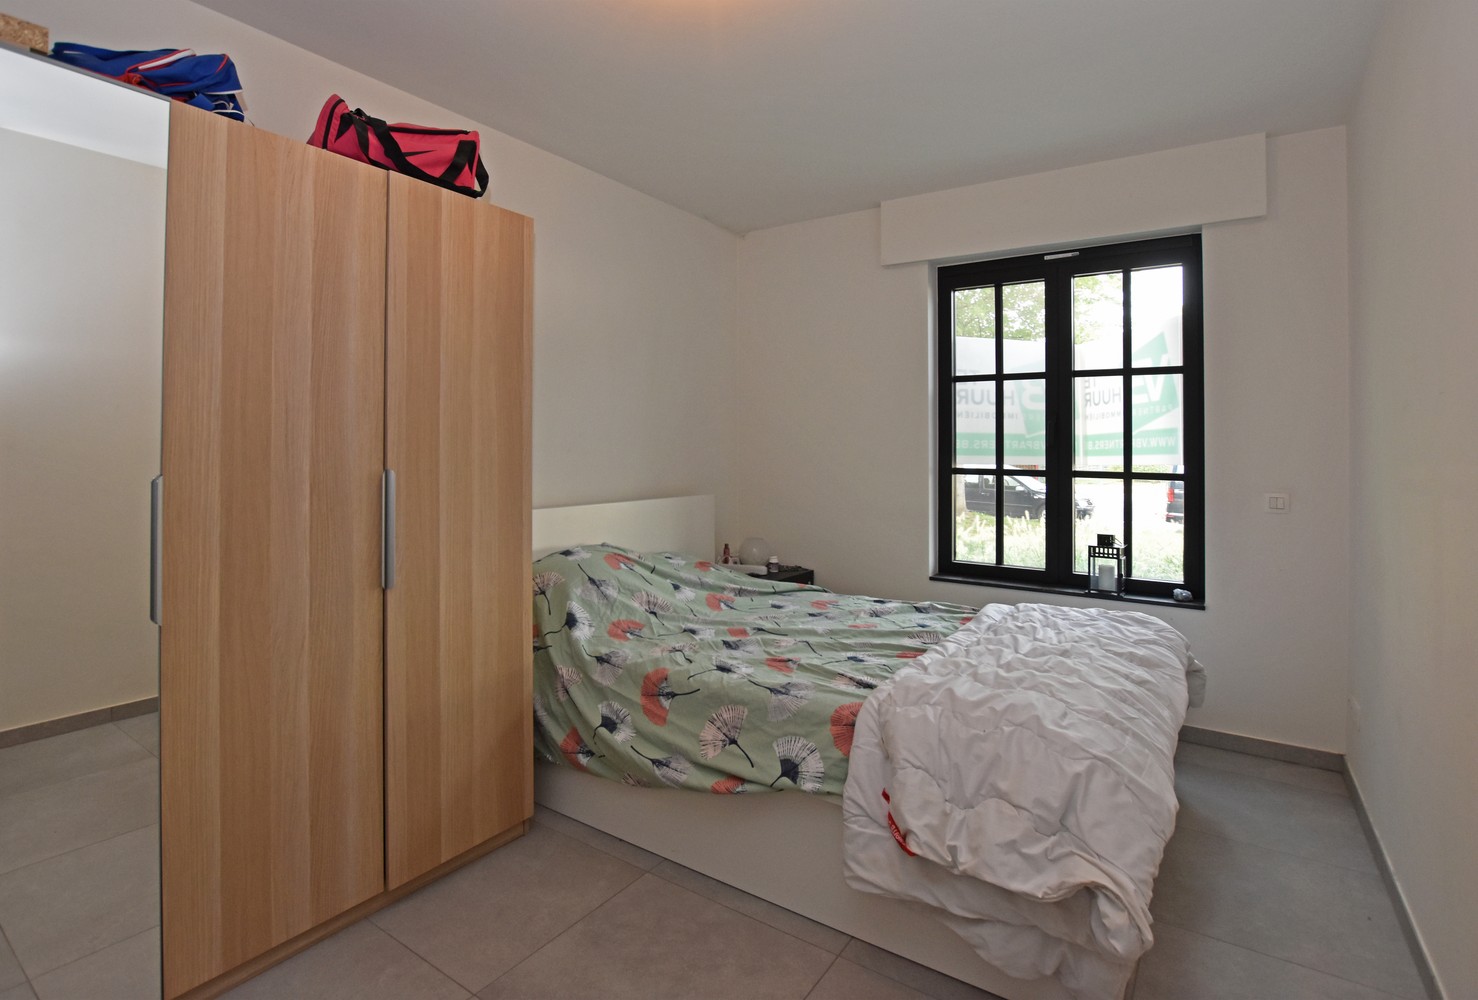 Ruim gelijkvloers appartement met drie slaapkamers en tuin te Wommelgem! afbeelding 6